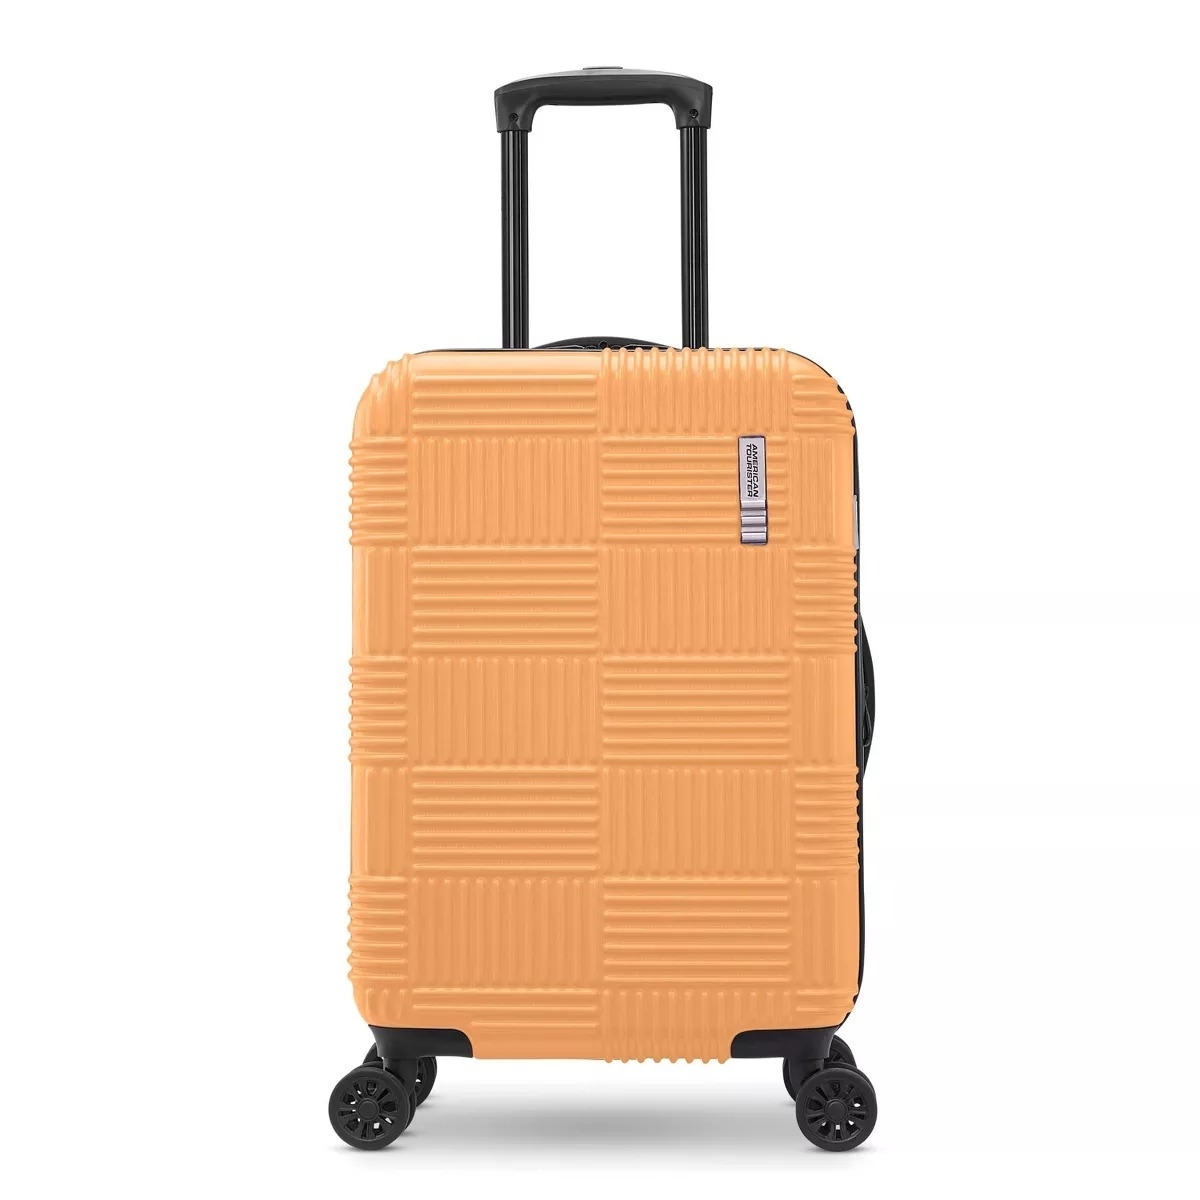 the luggage in light orange